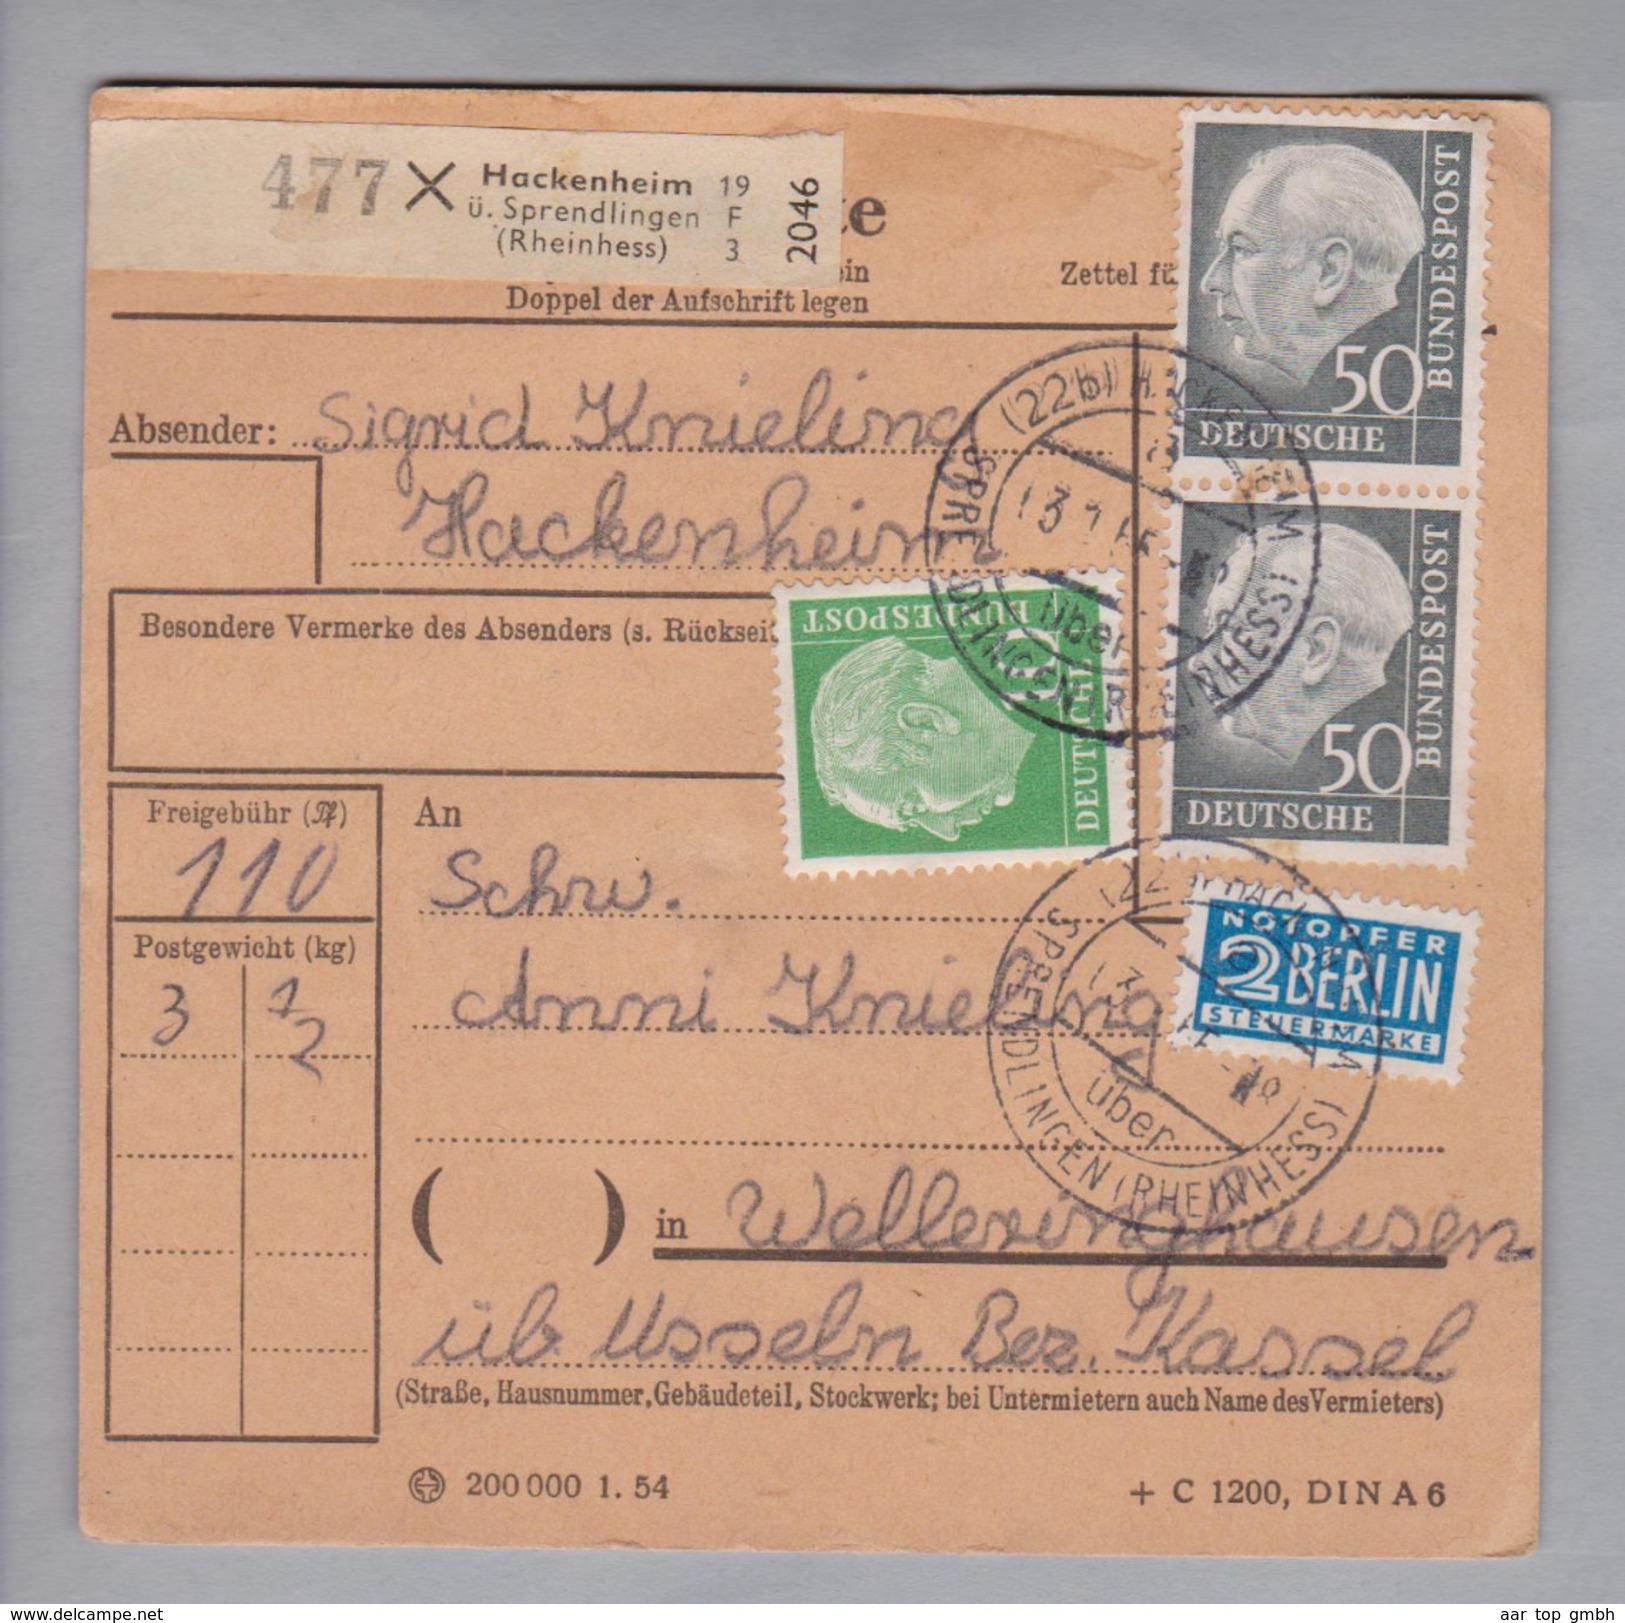 Heimat DE Rh.Pf. Hackenheim 1955-01-13 Paketkarte 3,5 Kg DM 1.10 - Lettres & Documents